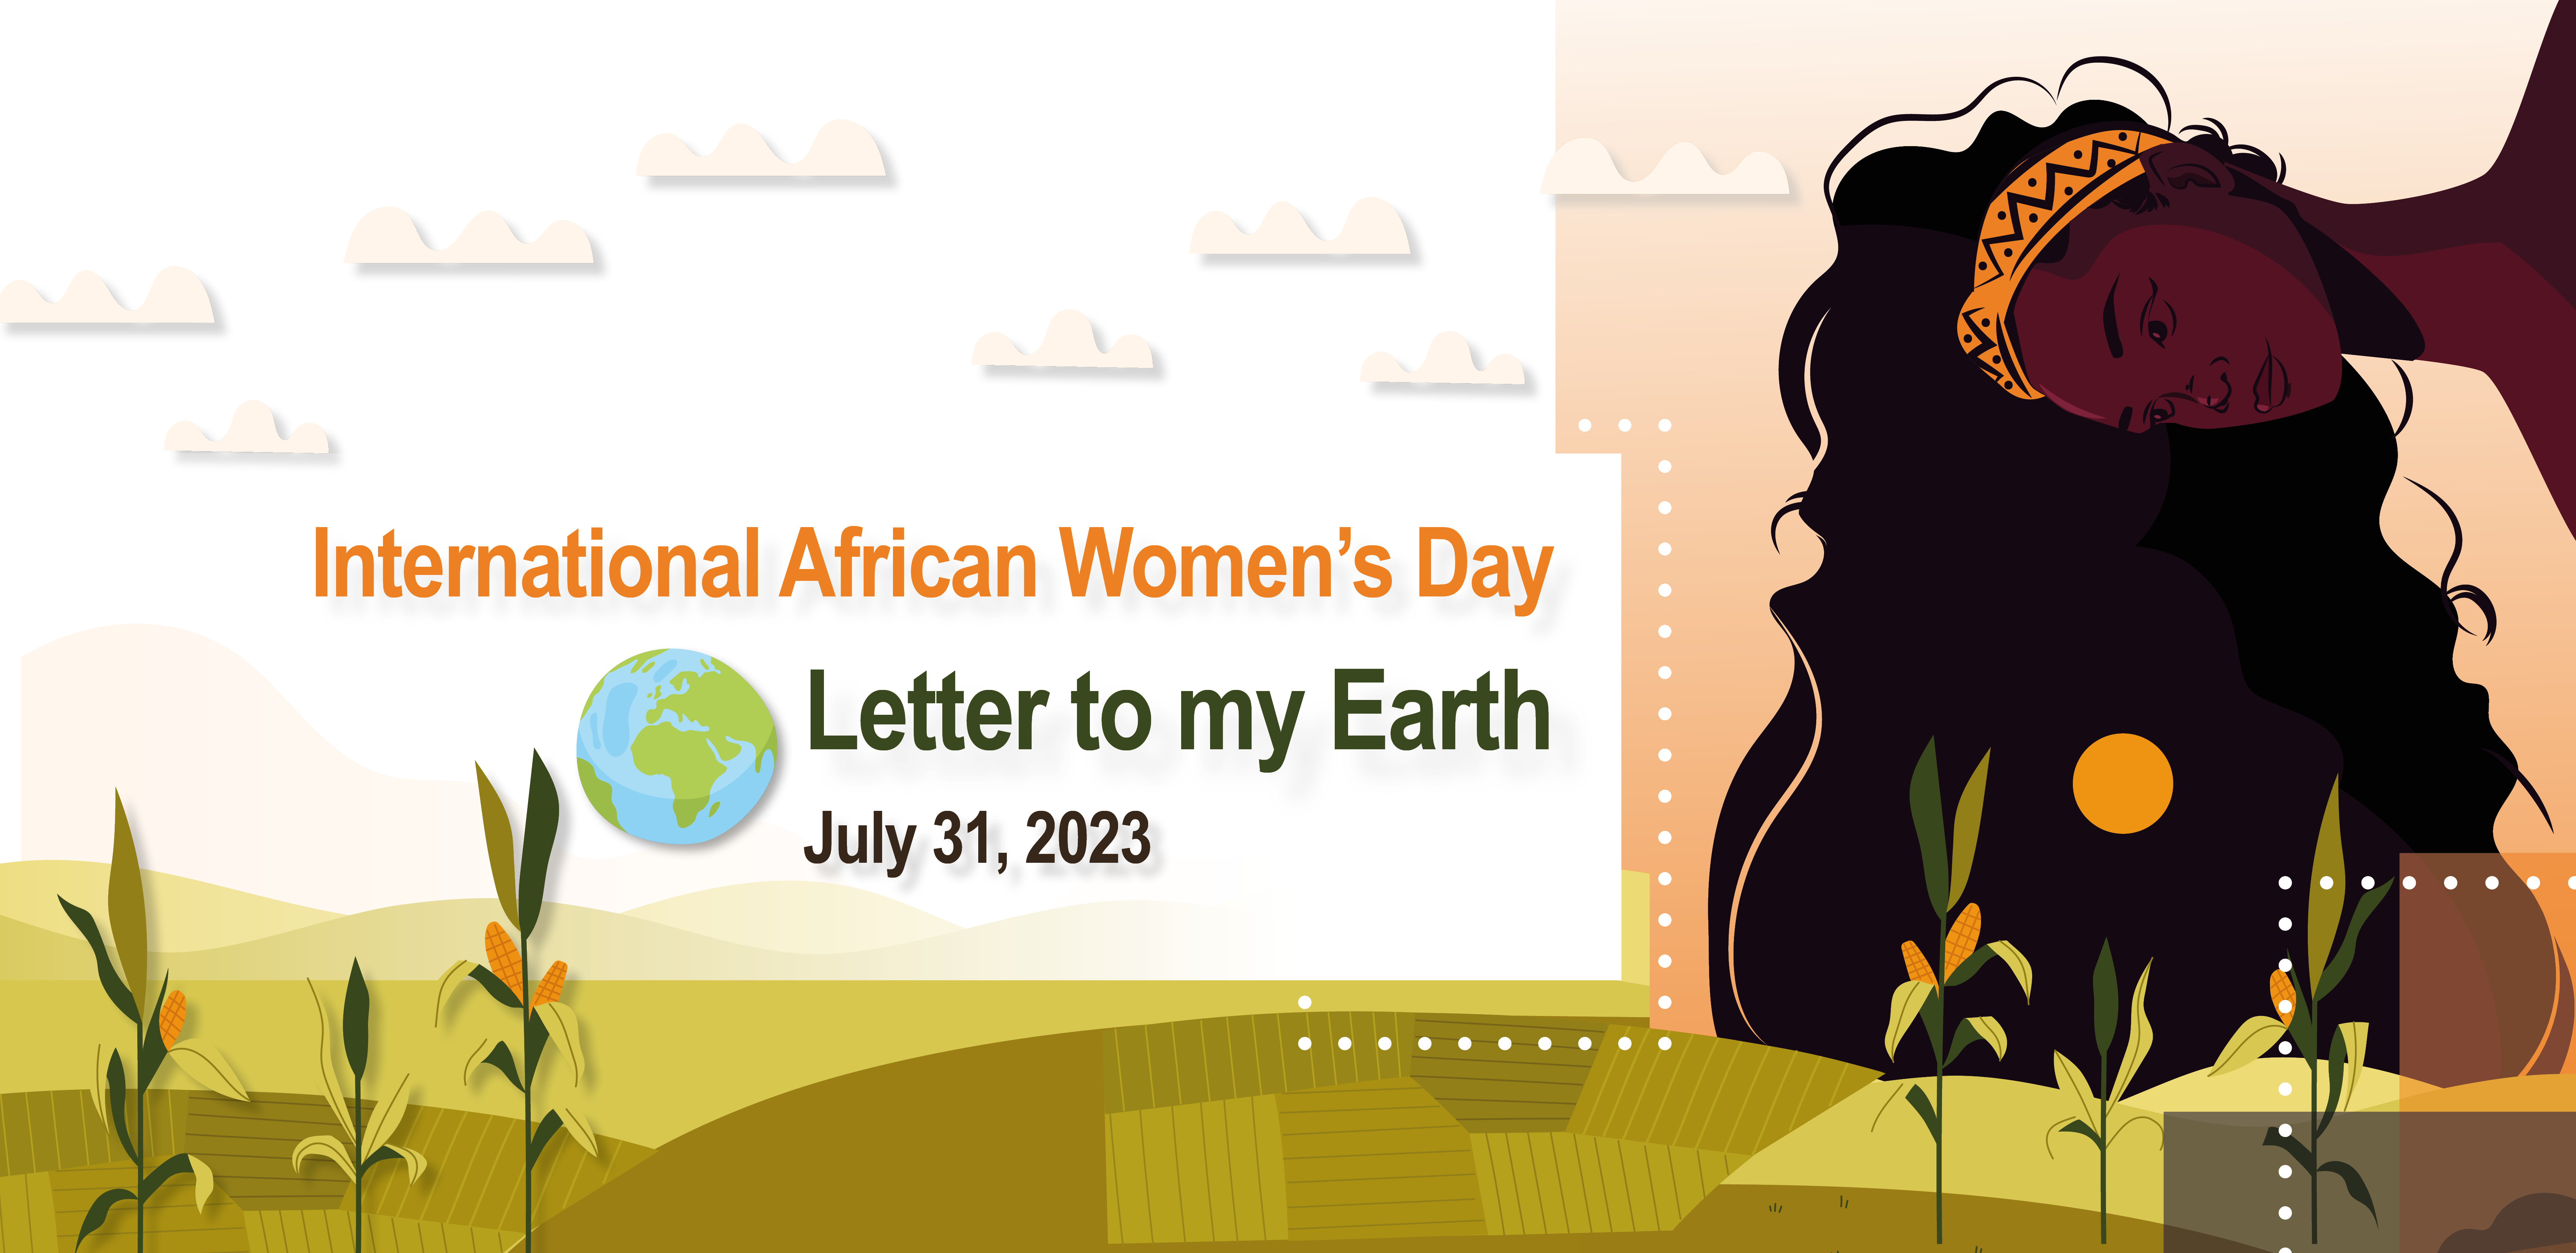 International African Women's Day